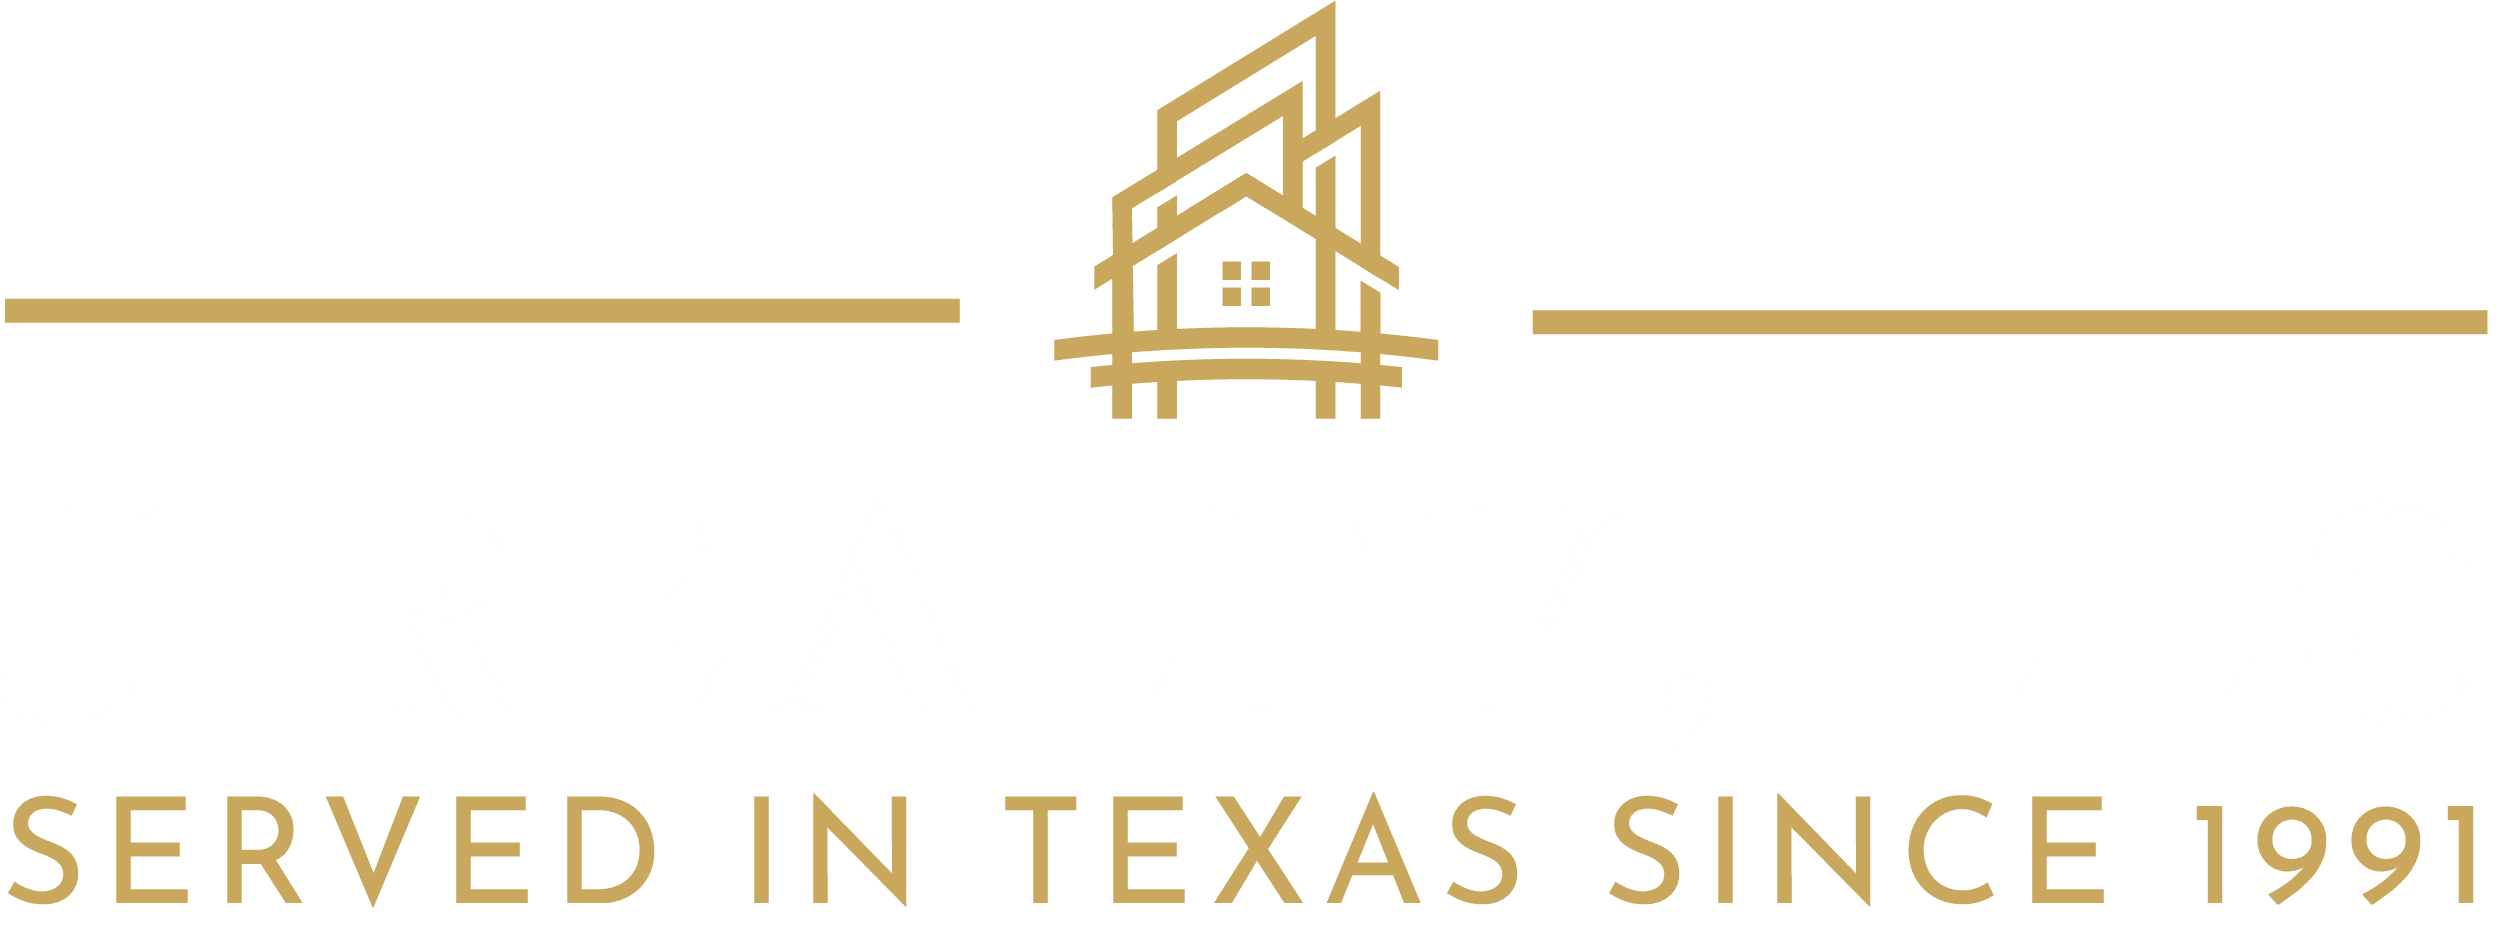 J Realty, LLC Commercial Real Estate in Dallas, TX 75229 logo